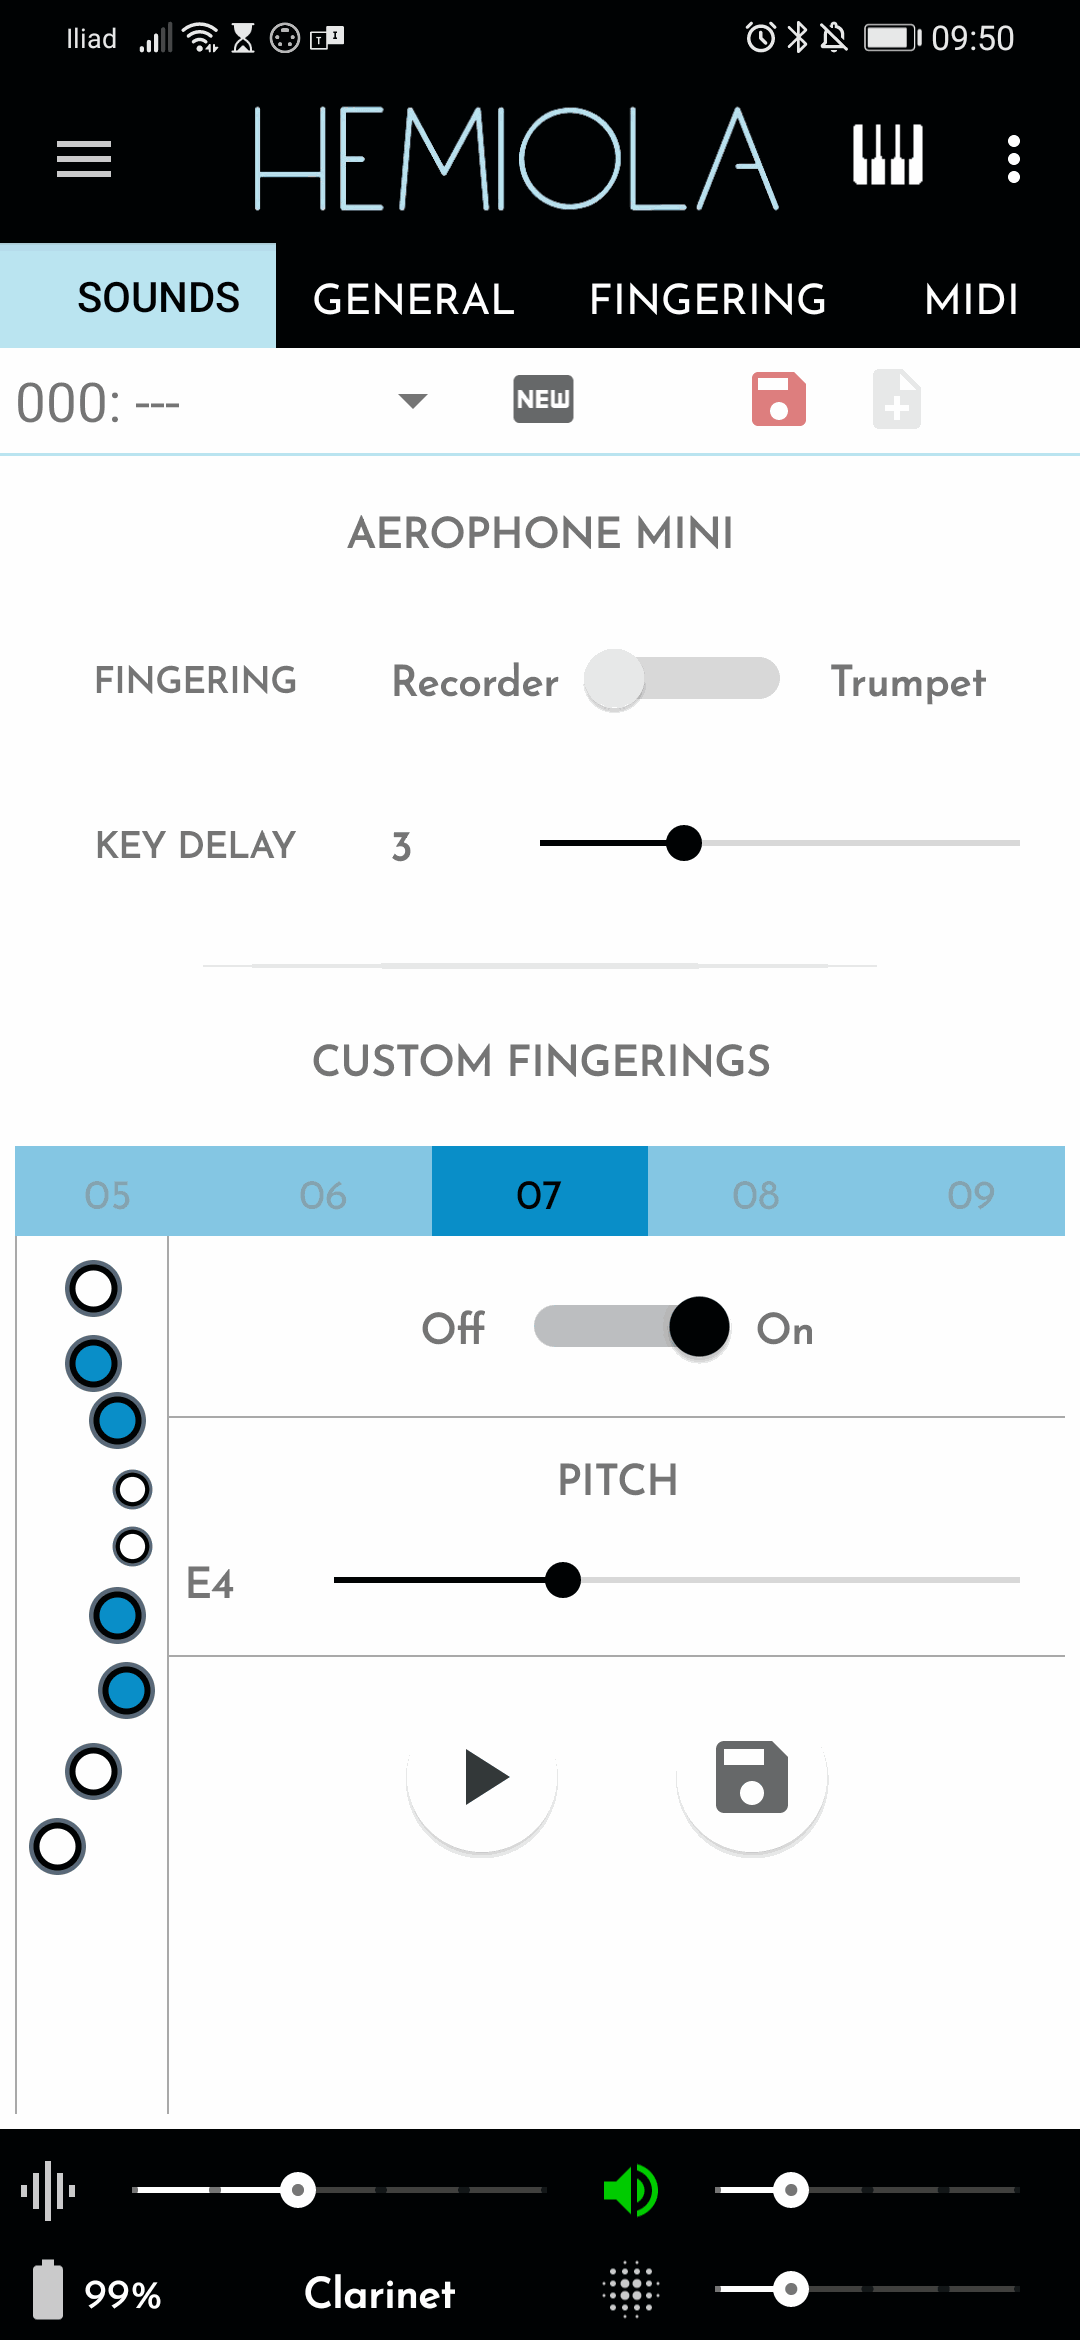 Has the Aerophone Mini anything to do with Recorders? - Hemiola custom fingerings